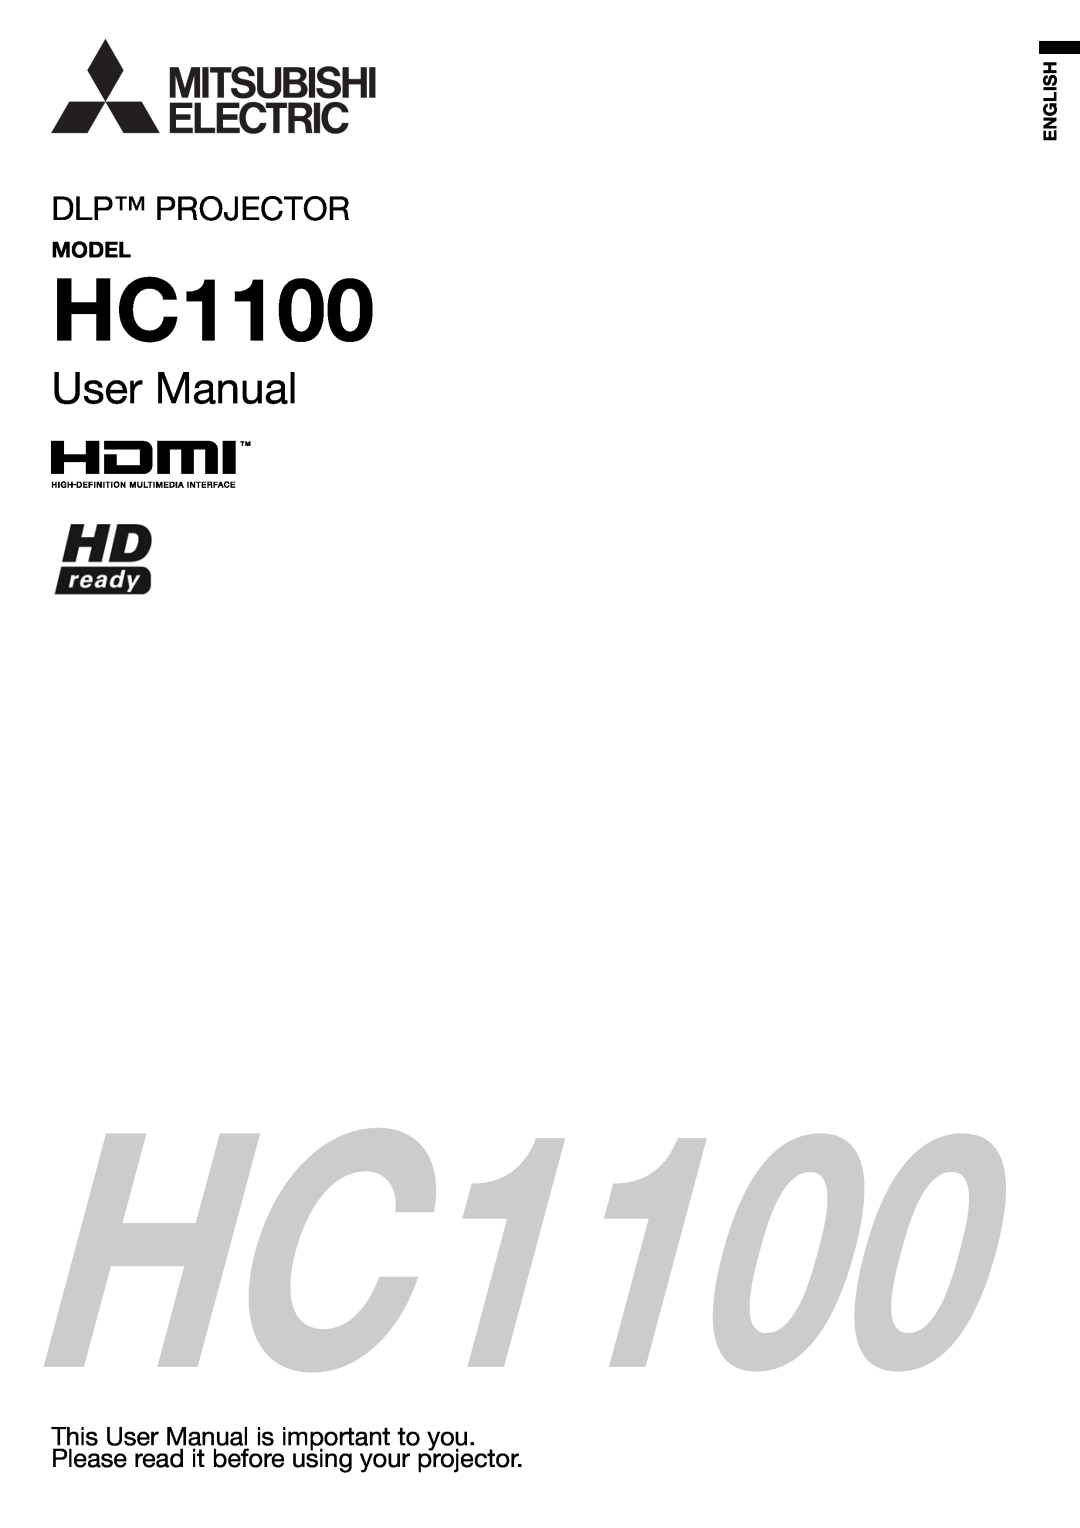 Mitsubishi HC1100 user manual Model, Dlp Projector, English 